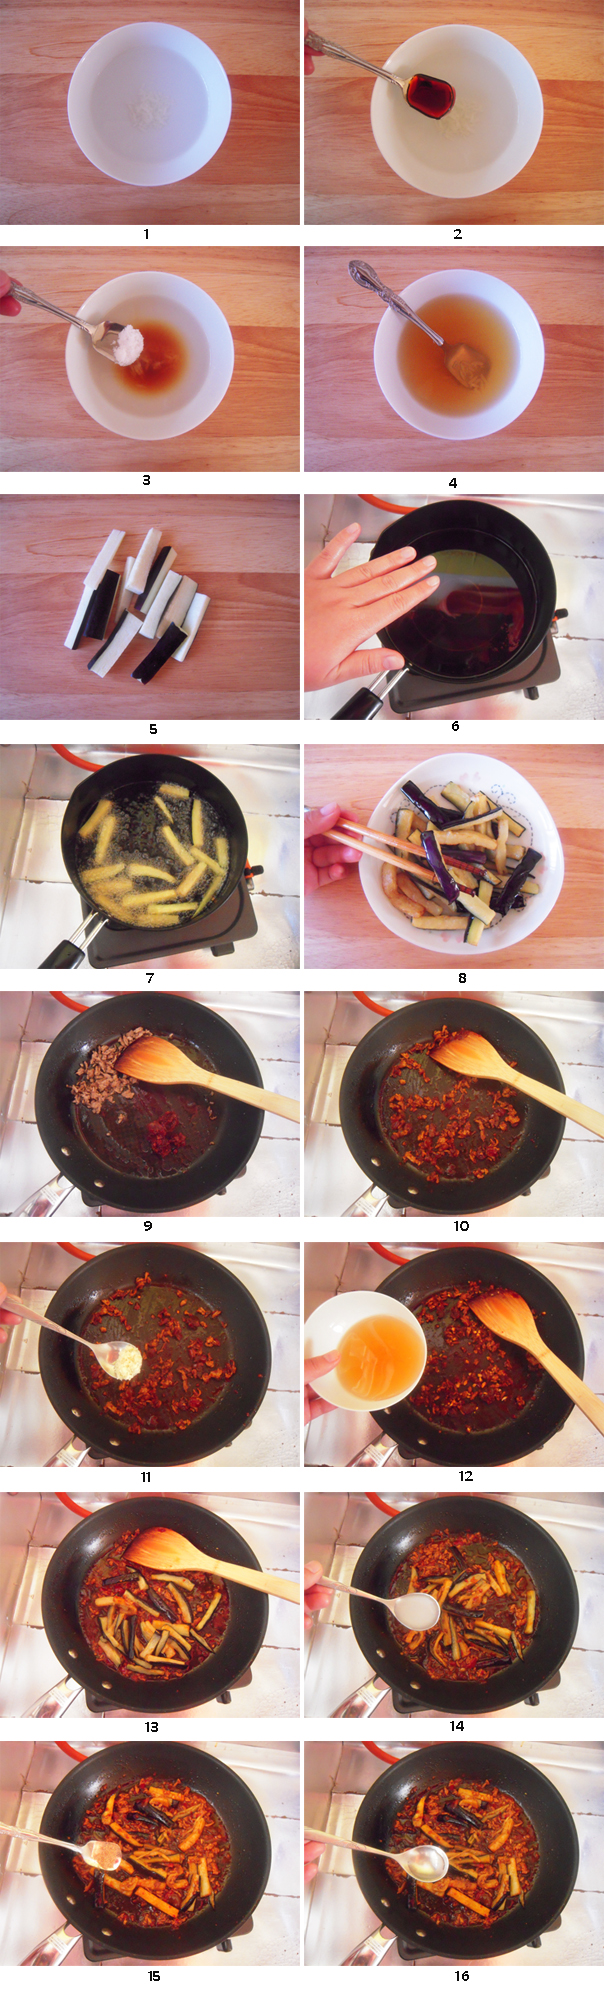 Yu Xiang Eggplant steps